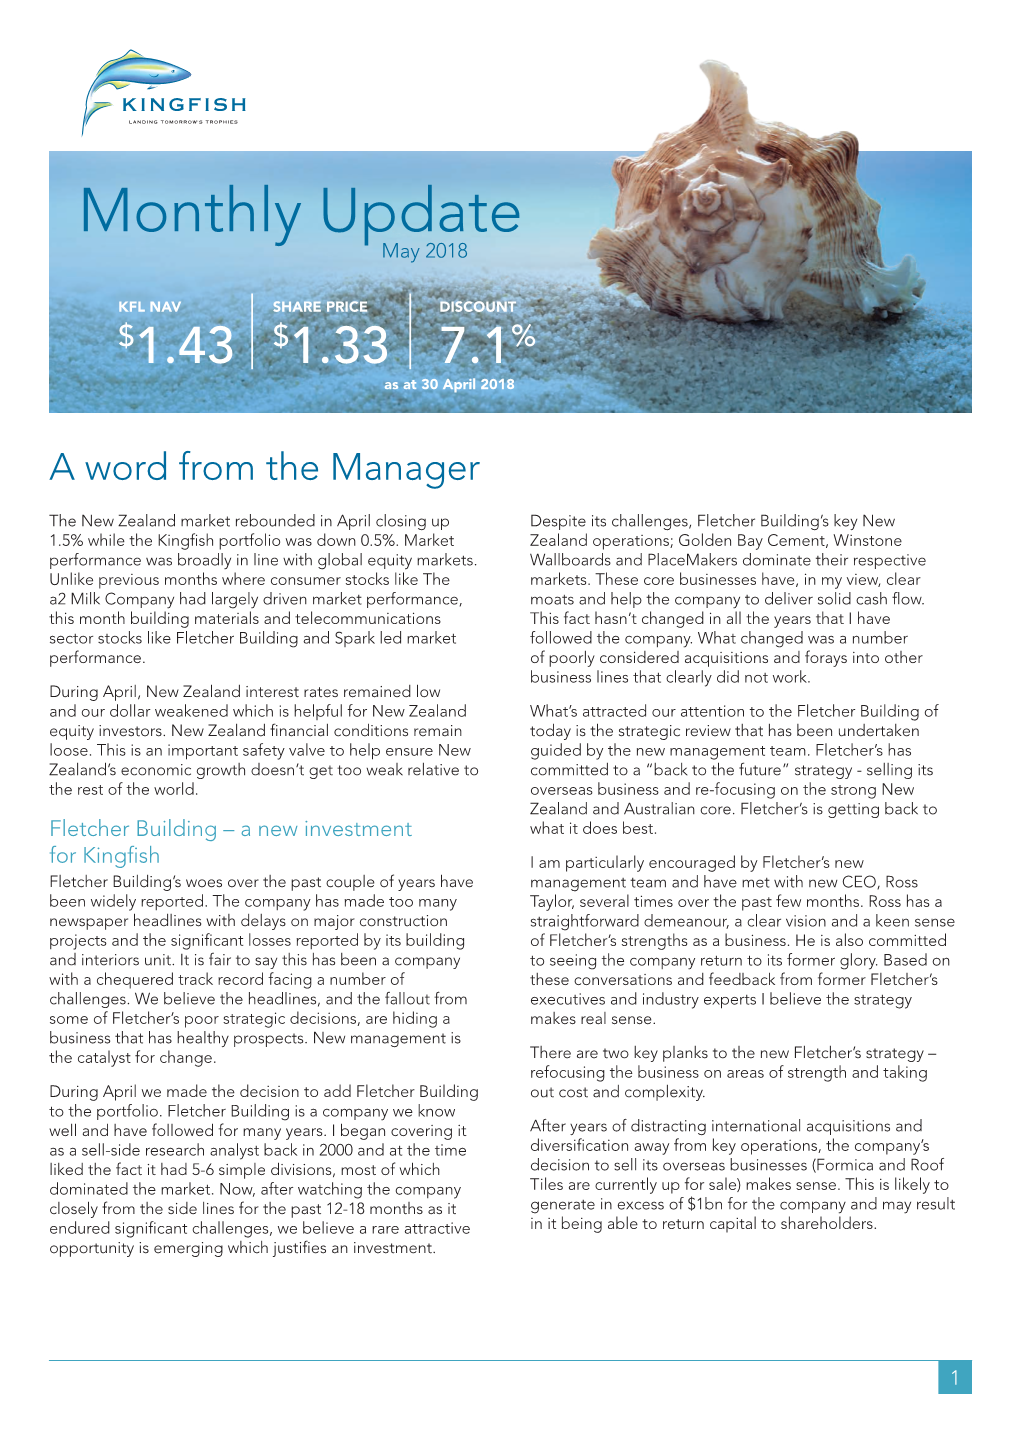 Kingfish Monthly Update